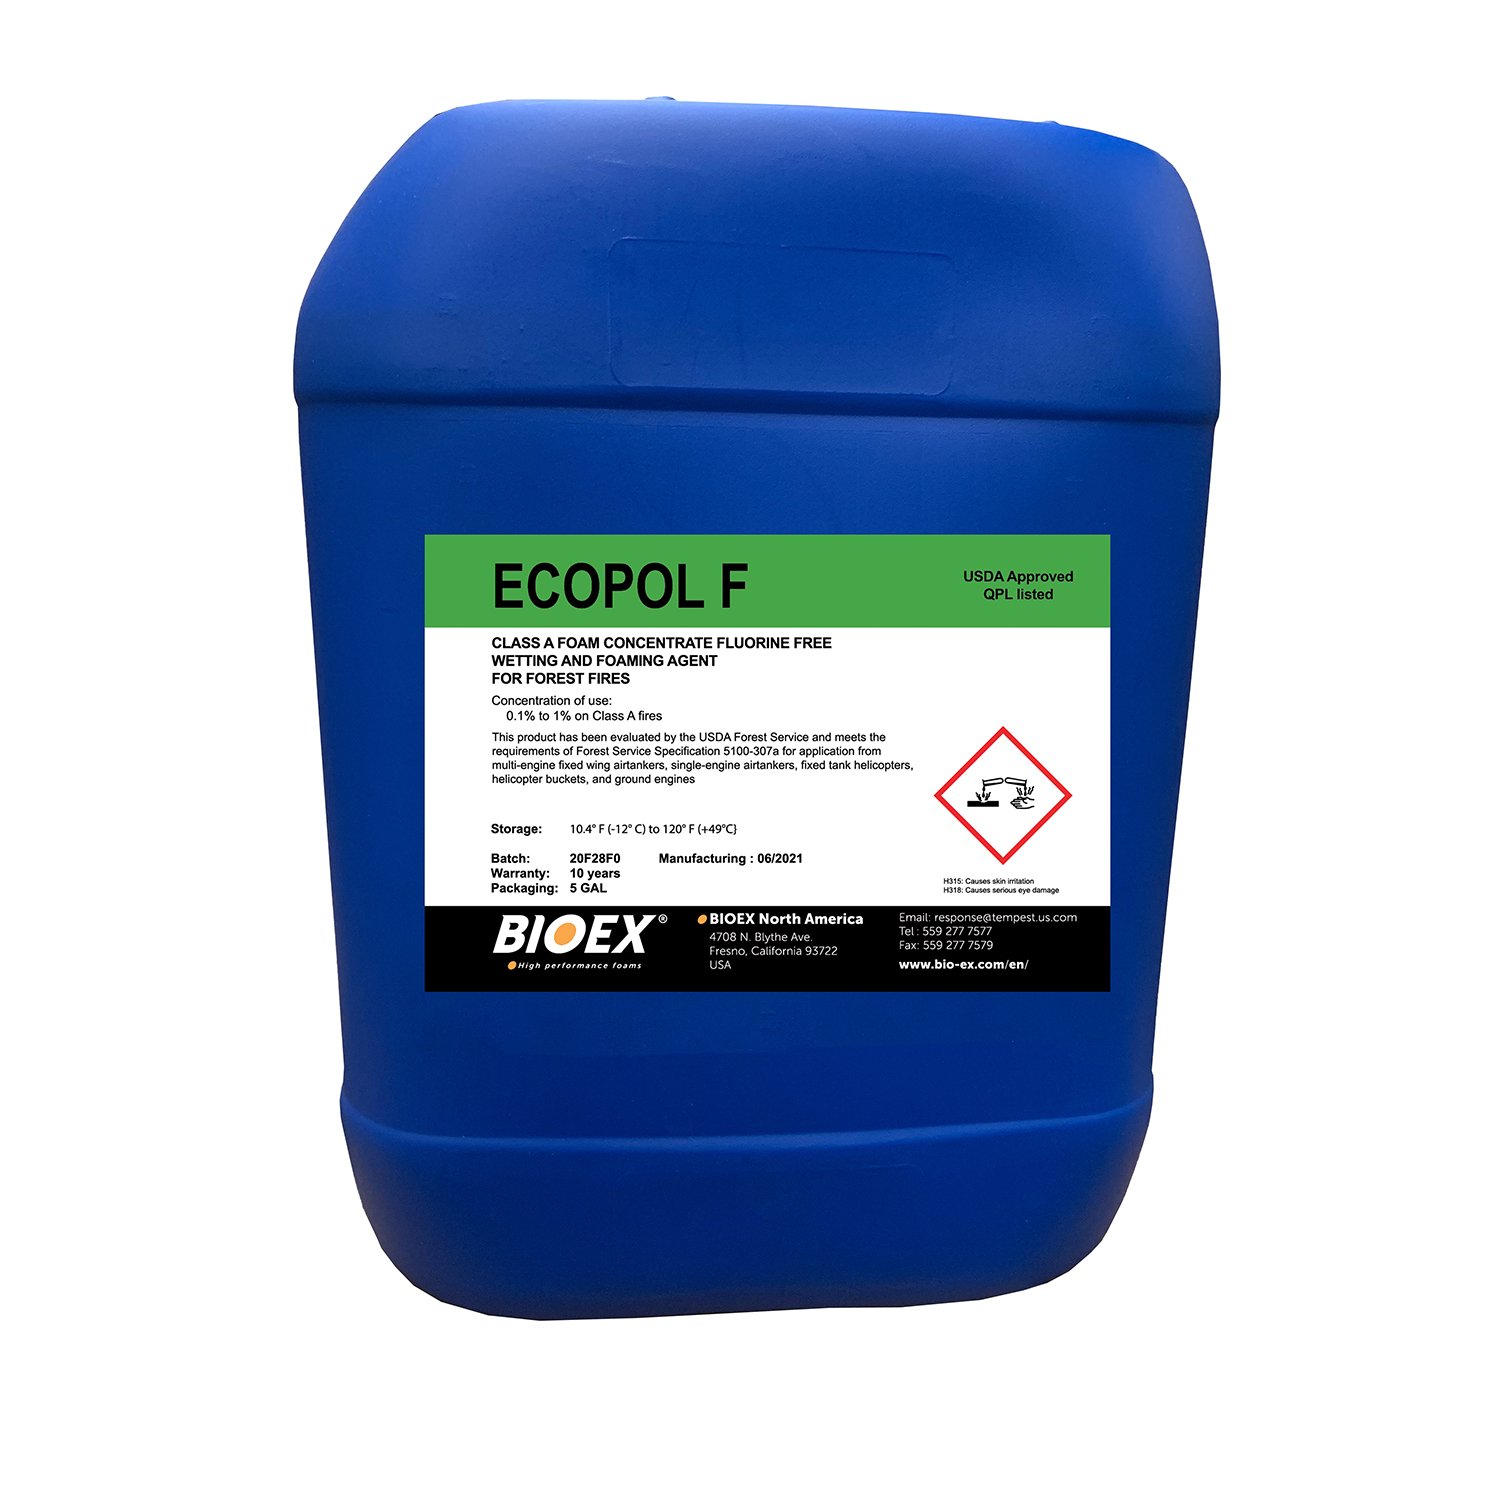 BIO-EX Firefighting Foam: ECOPOL F, Class A Wildfires, Ethanol/Proprietary Mixture of Surfactants